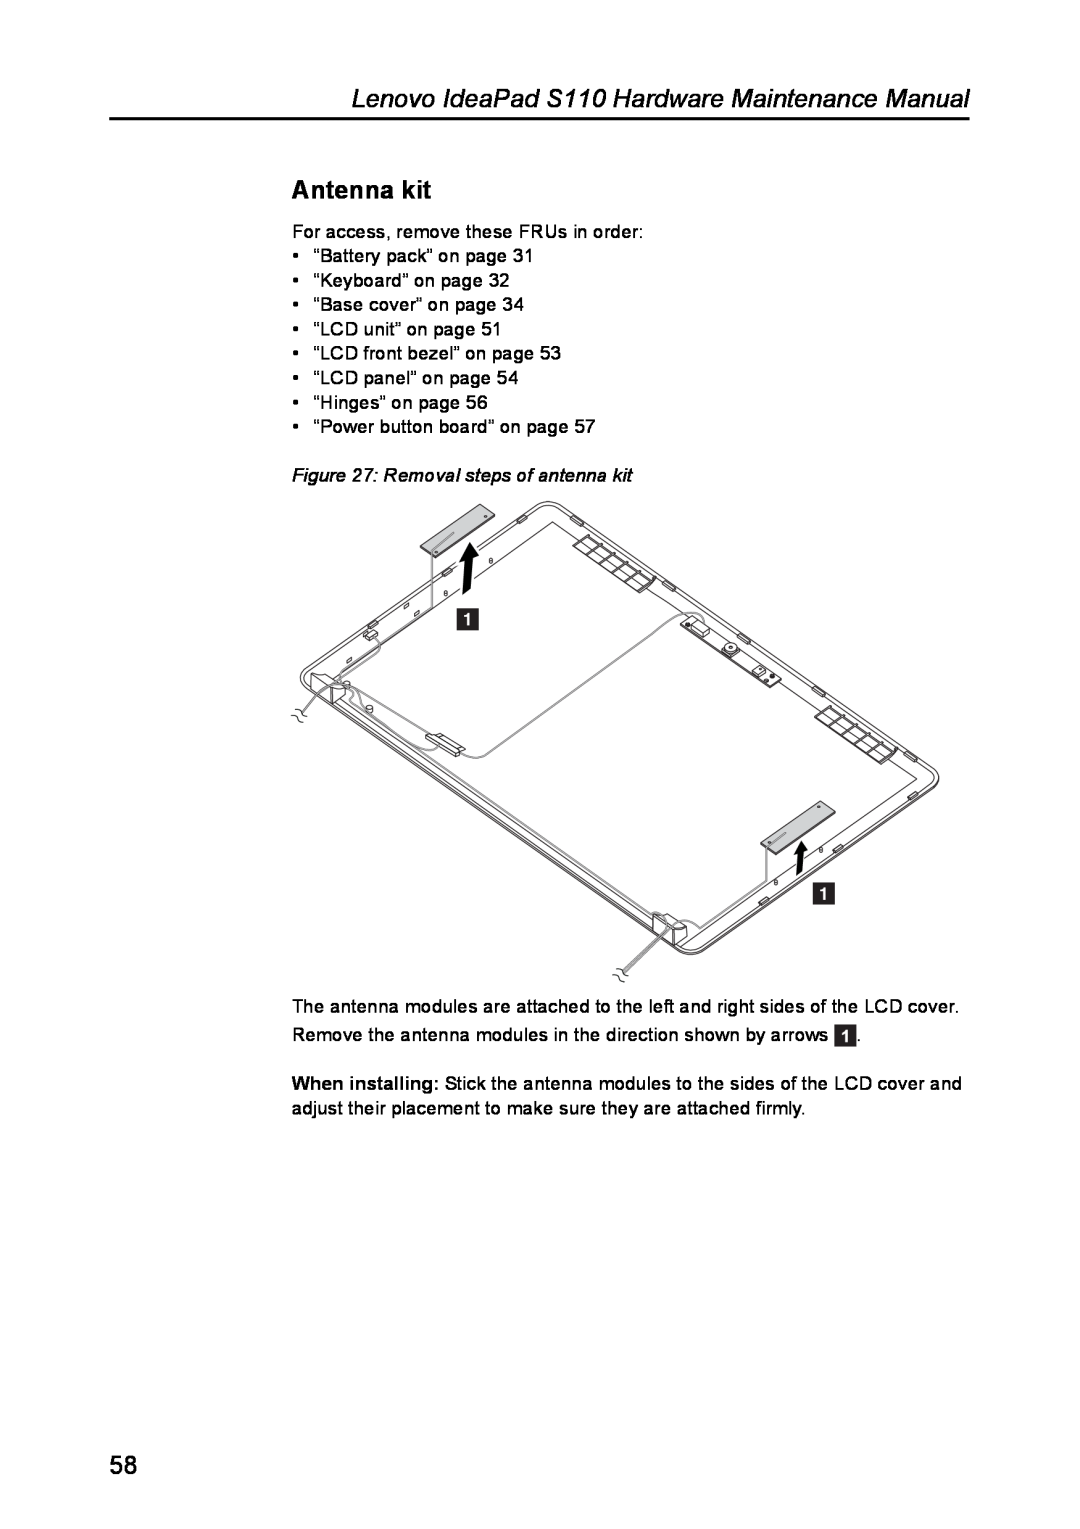 Lenovo manual Antenna kit, Removal steps of antenna kit, Lenovo IdeaPad S110 Hardware Maintenance Manual 